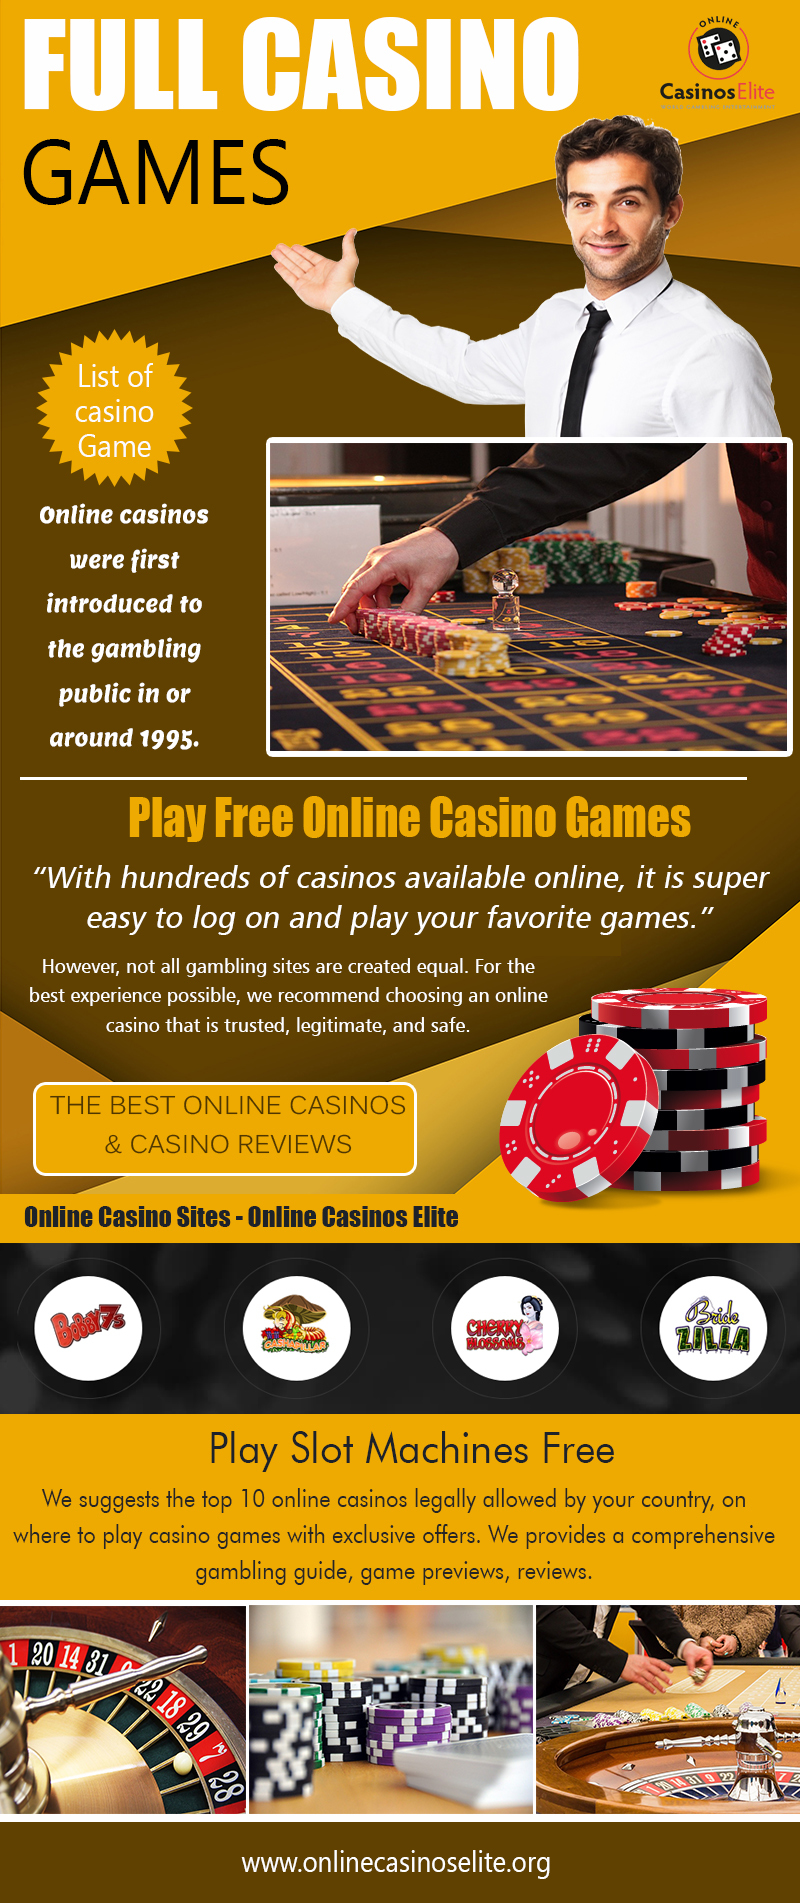 Full Casino Games | onlinecasinoselite.org